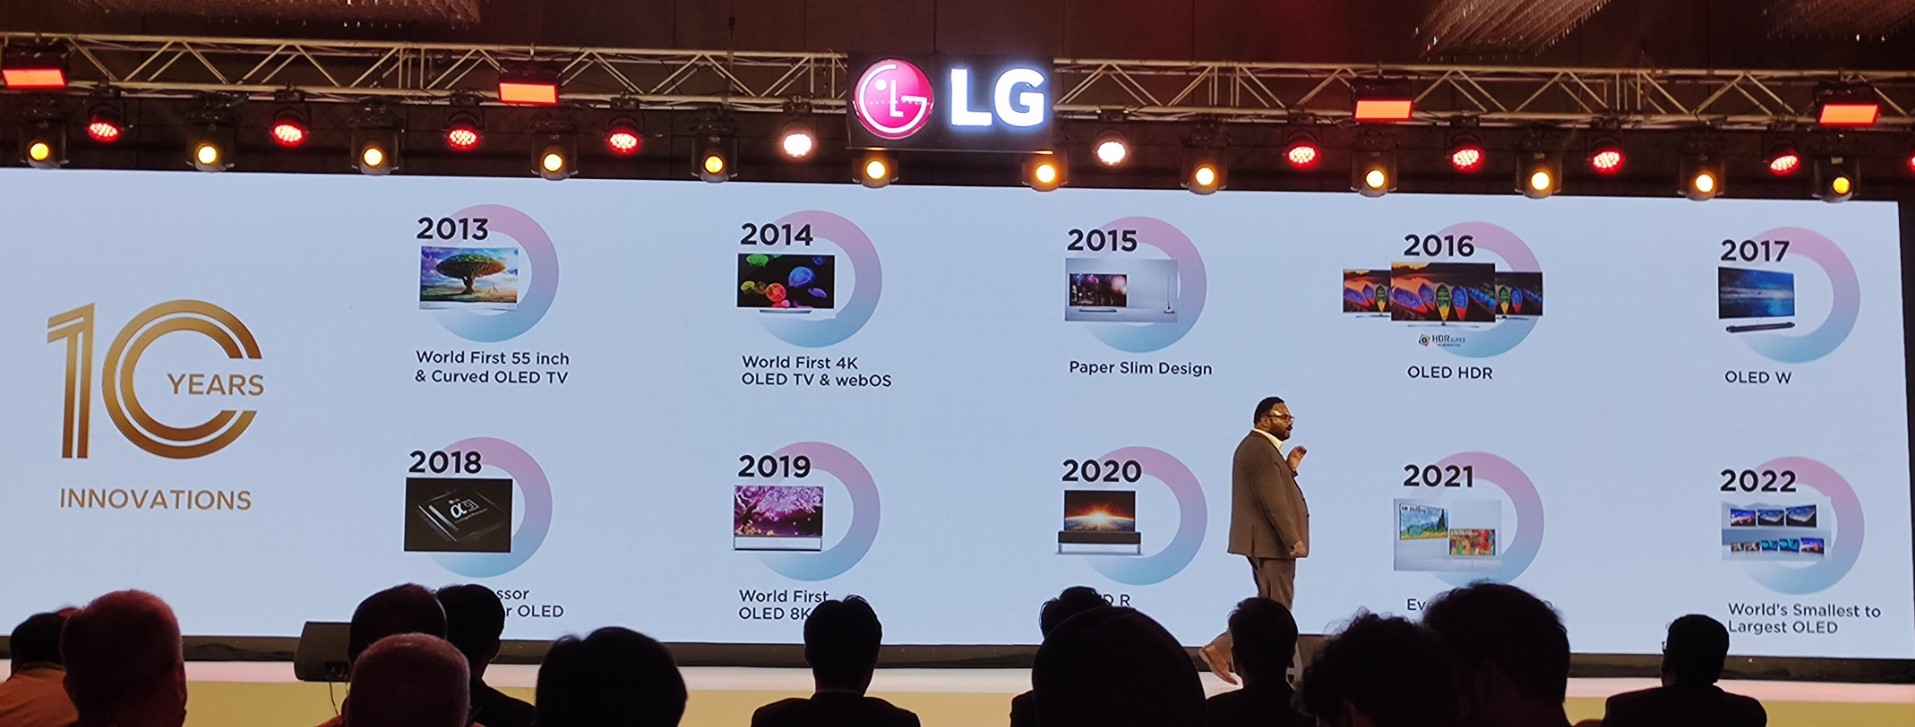 LG 10 years innovations